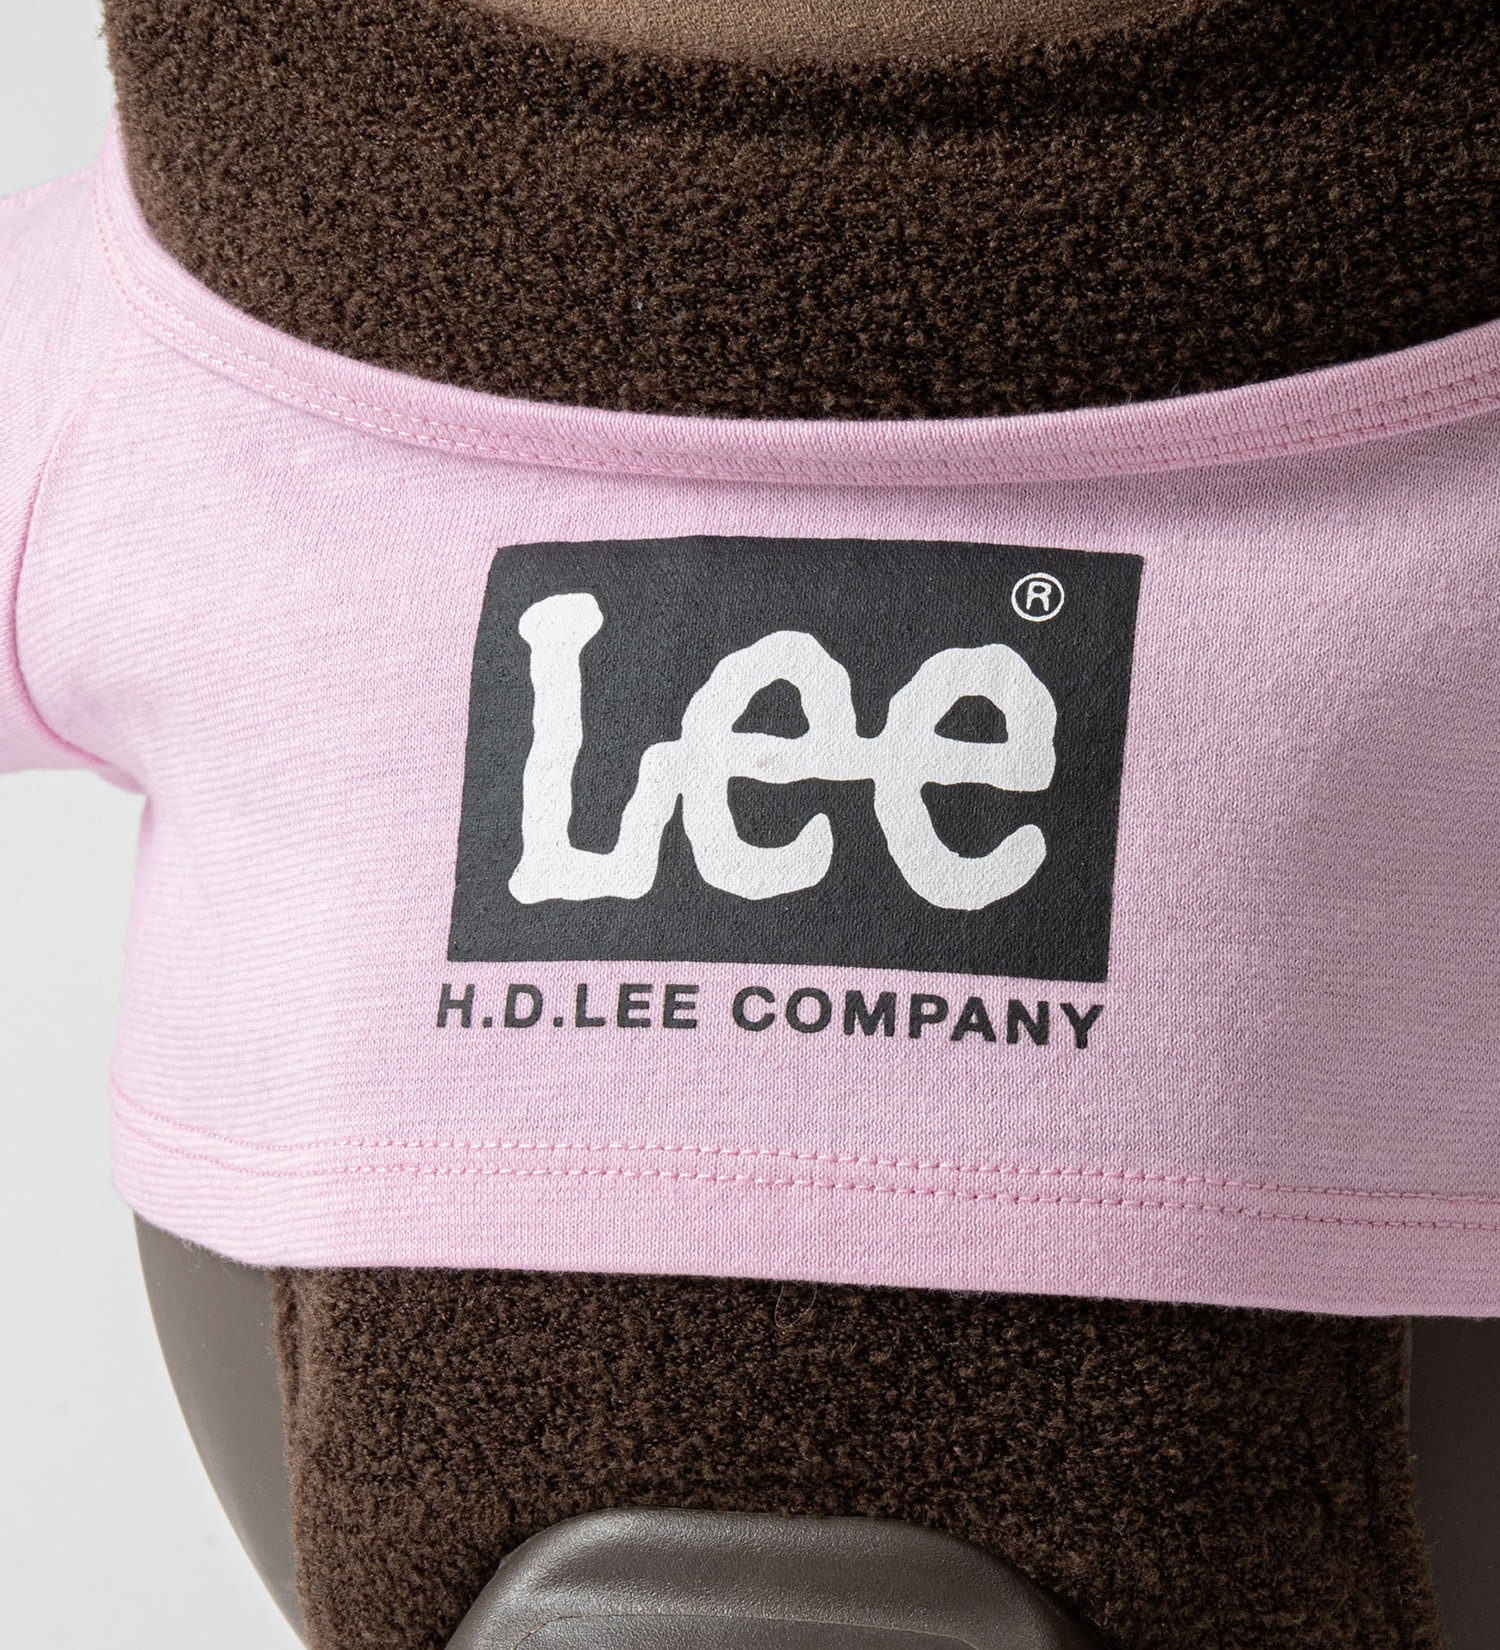 Lee(リー)の【Lee x LOVOT】Tシャツ|ファッション雑貨/その他雑貨/メンズ|ピンク